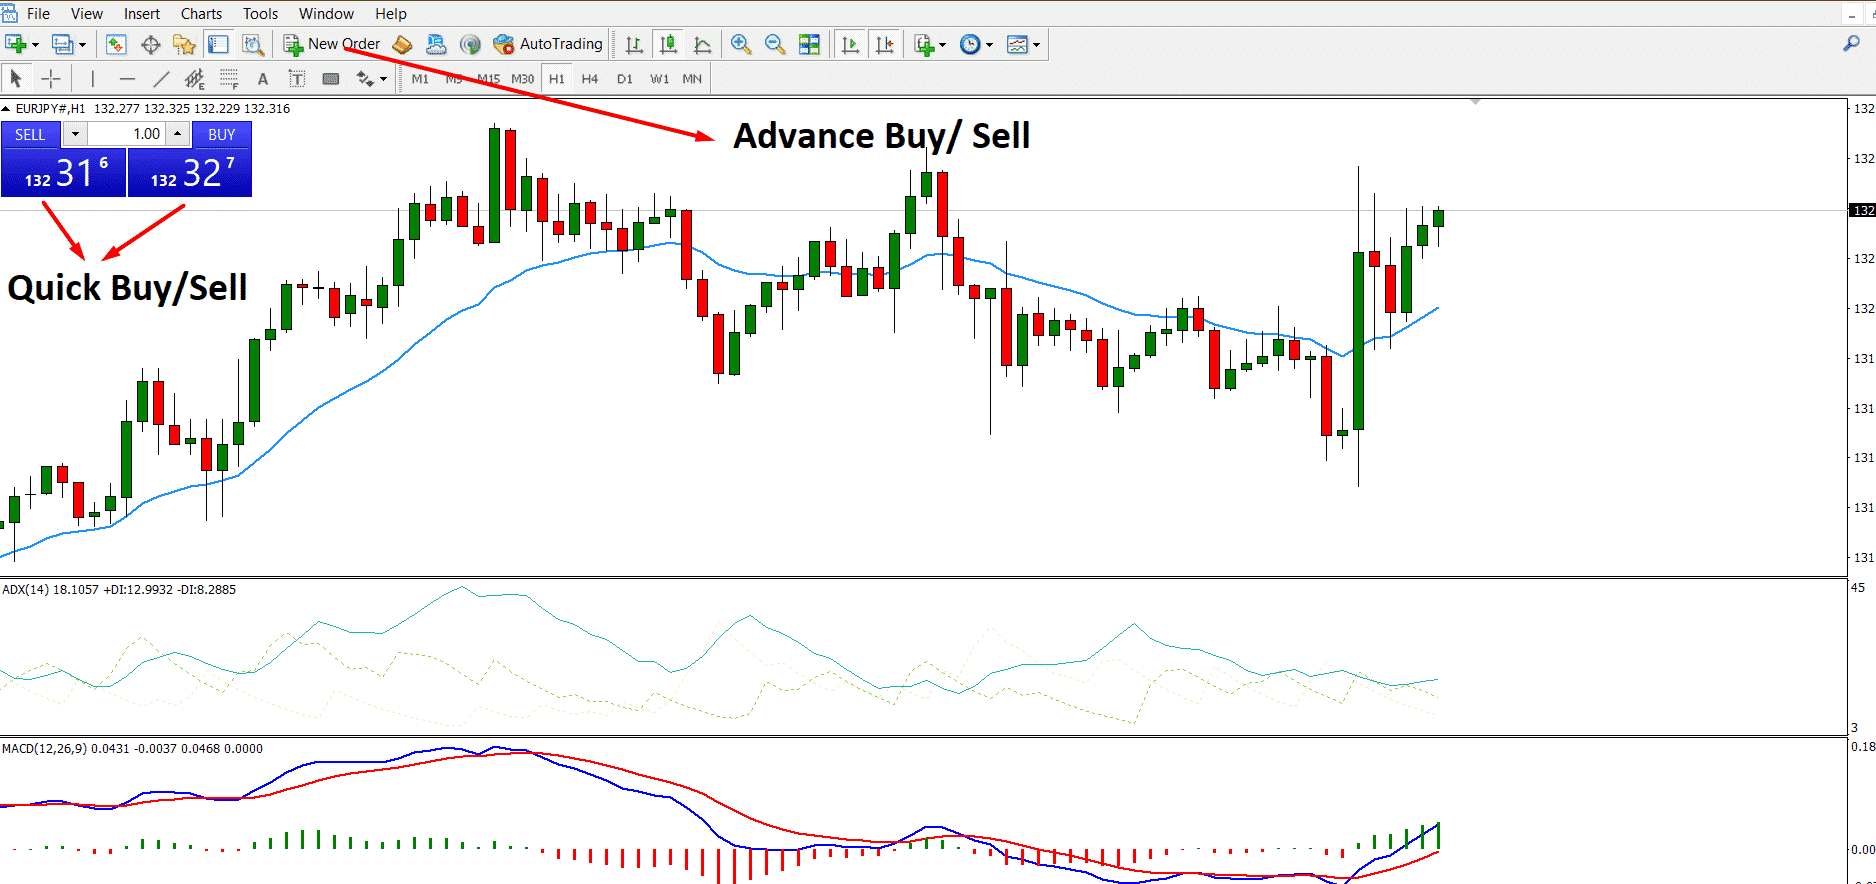 Advanced Buy Sell